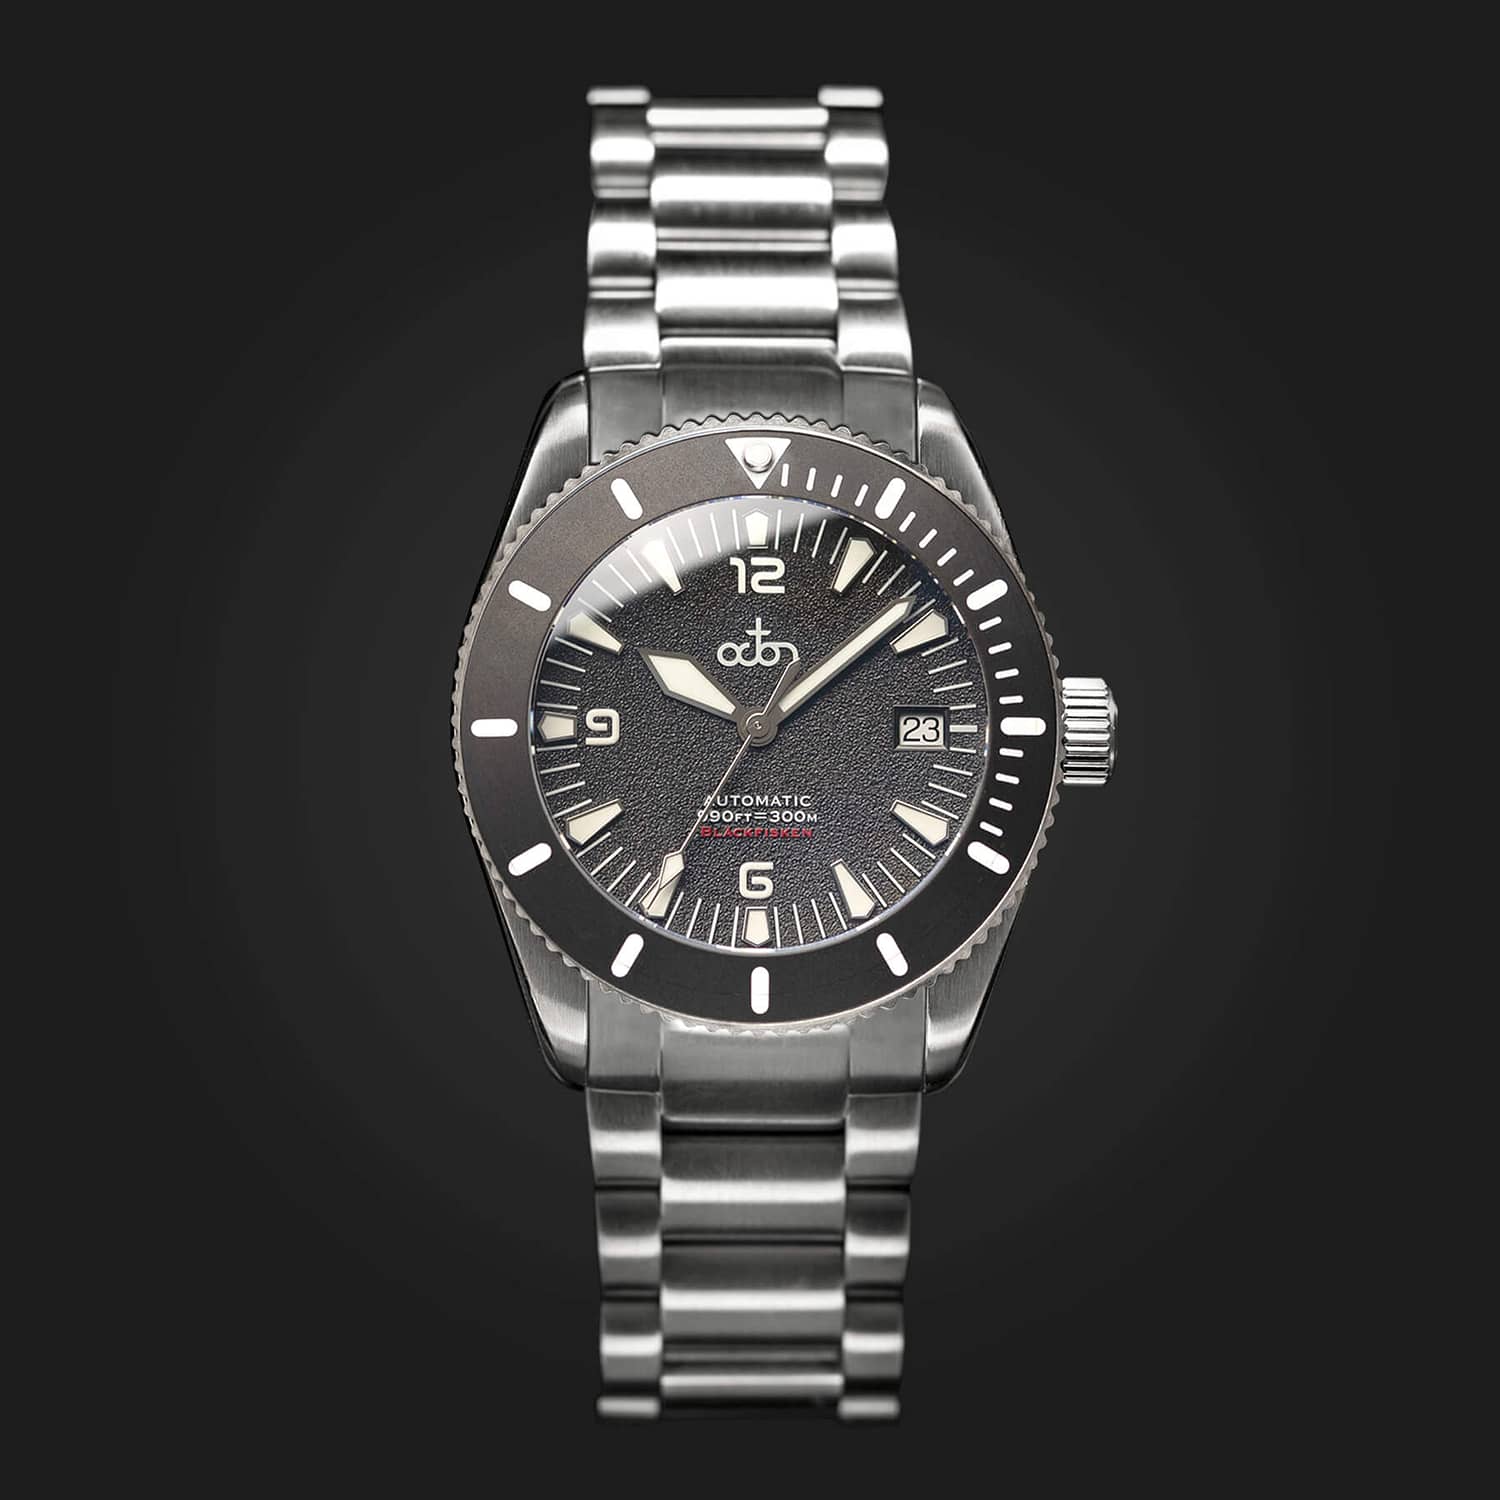 Bläckfisken - Black - Swiss Made Watch with Stainless Steel Bracelet